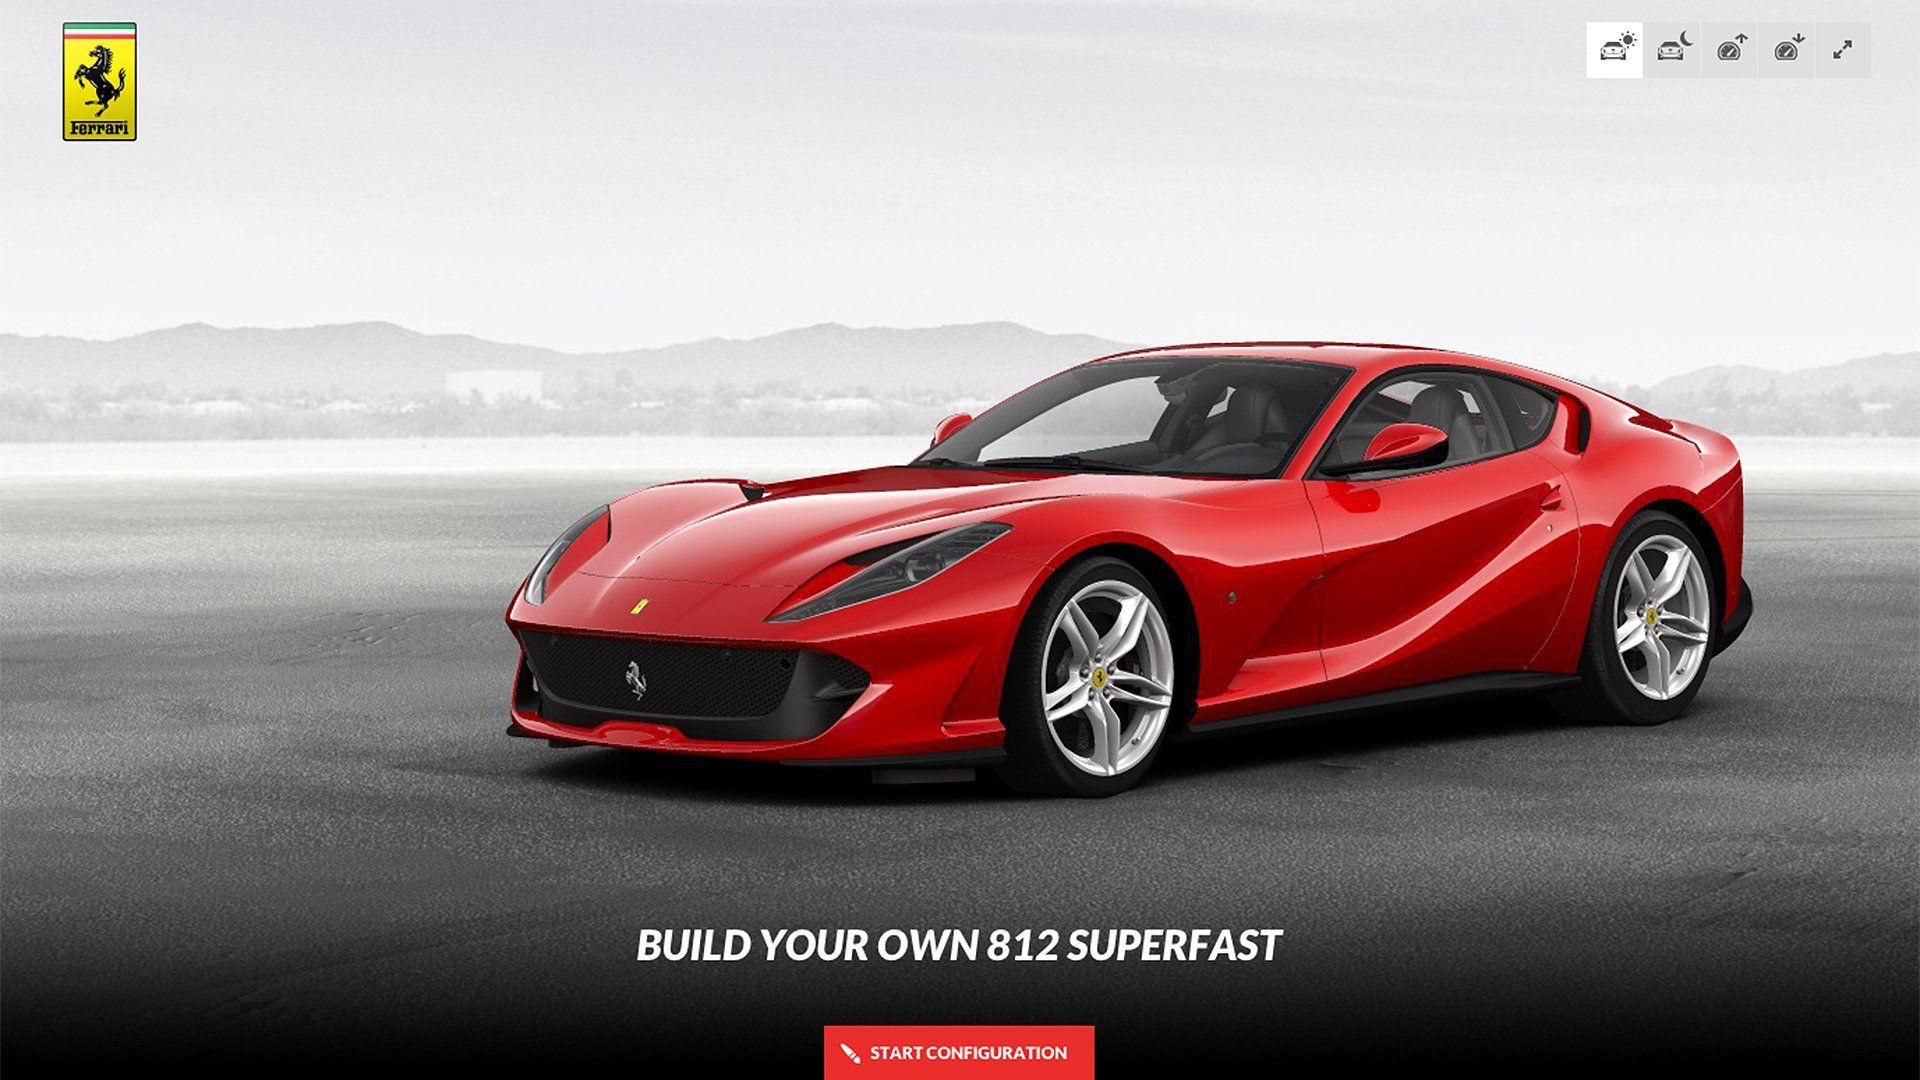 Ferrari Superfast Car Configurator Is Up and Running